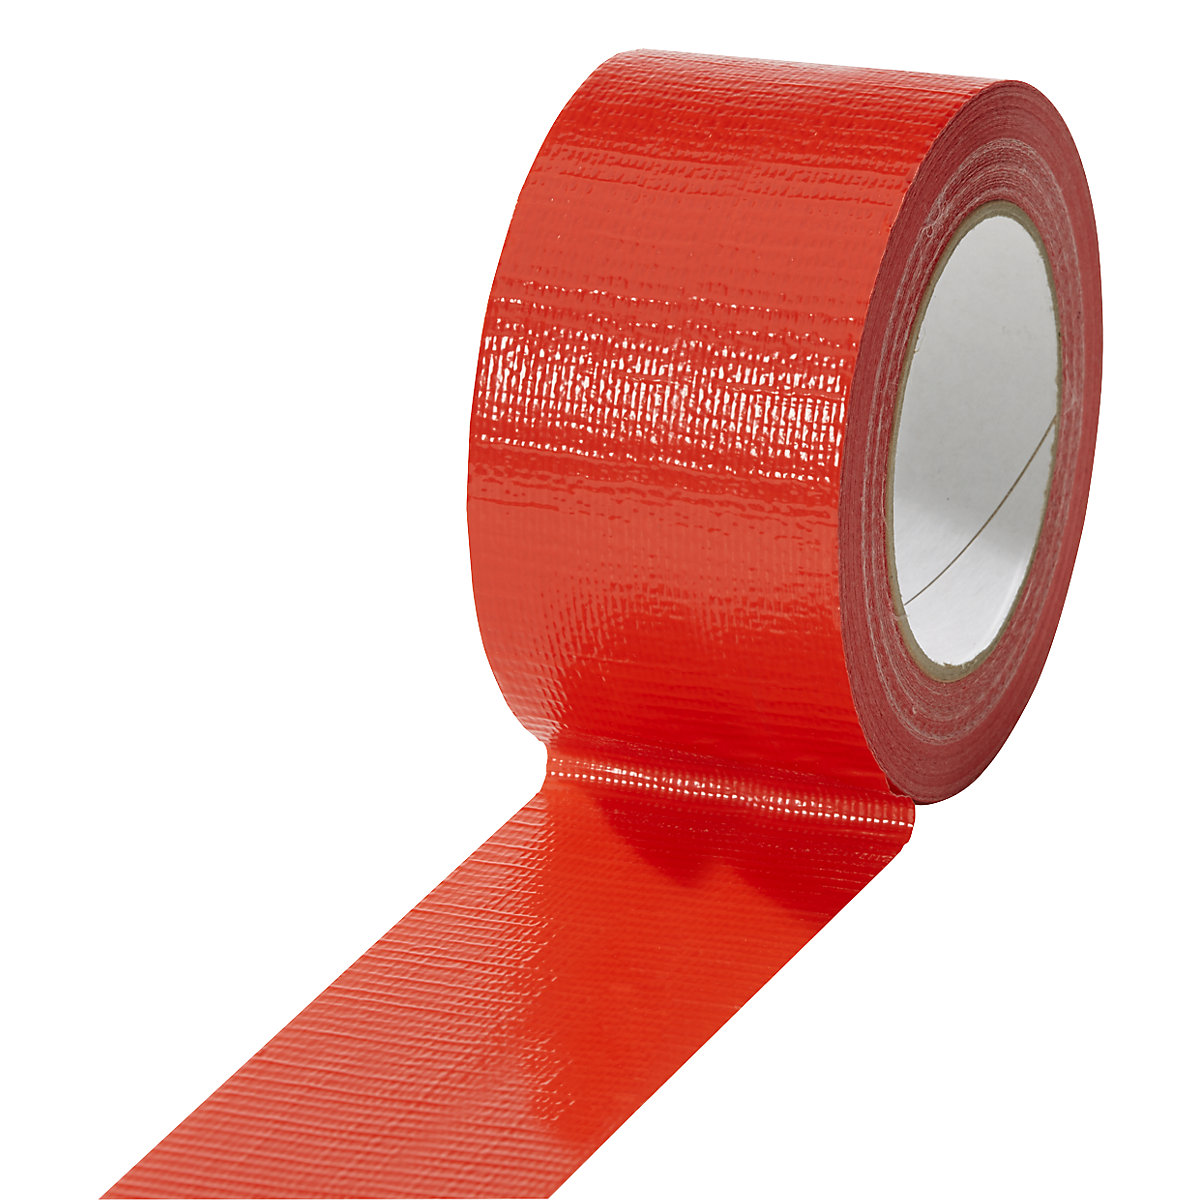 Tkaninová páska, v různých barvách, bal.j. 18 rolí, červená, šířka pásky 50 mm-17